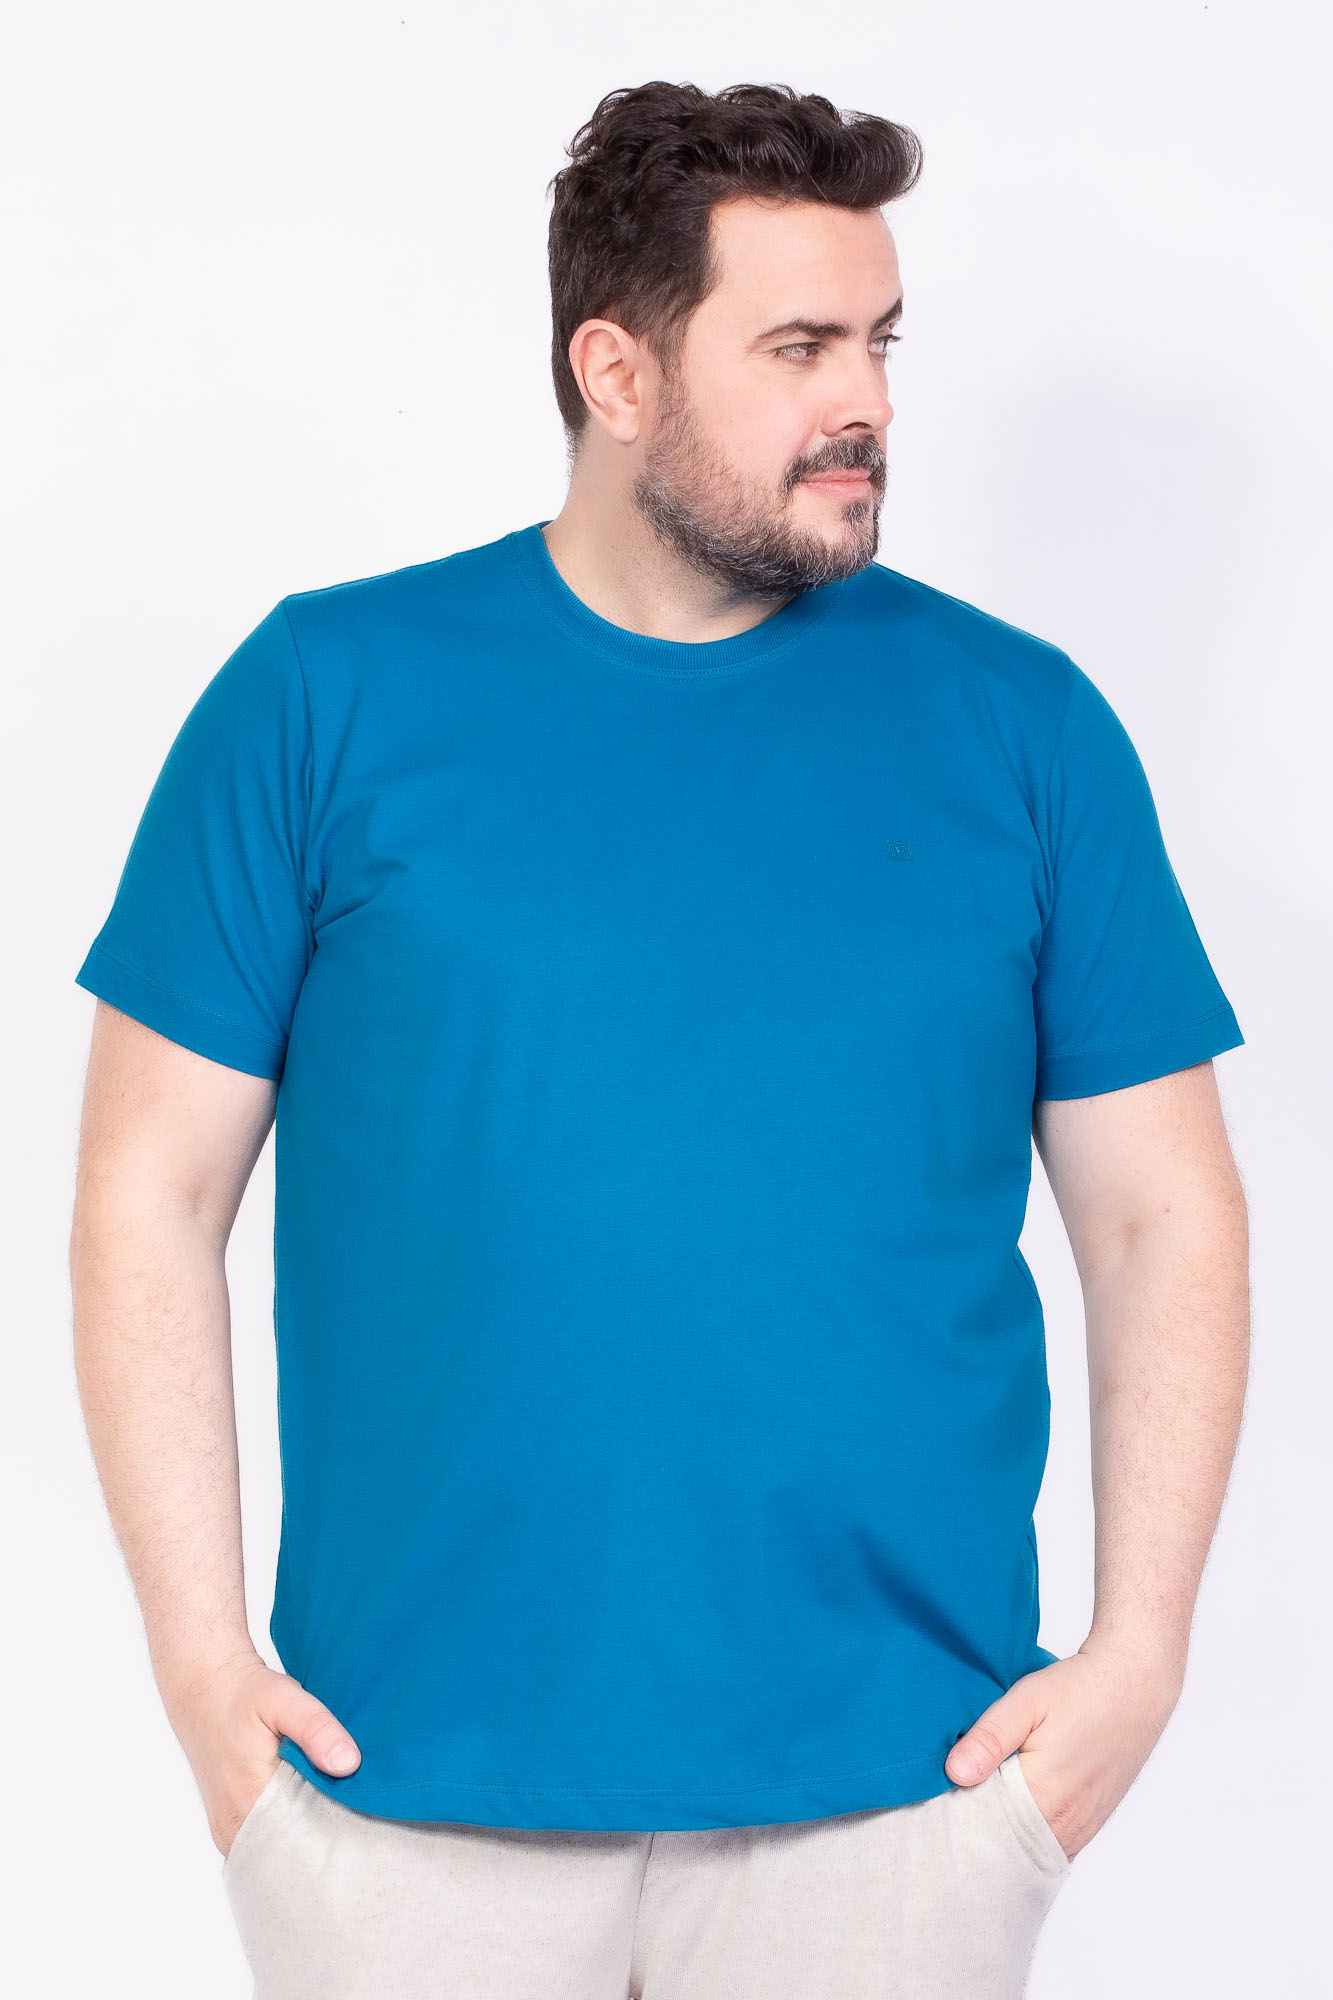 Camiseta Básica 100% algodão azul esmeralda Plus size